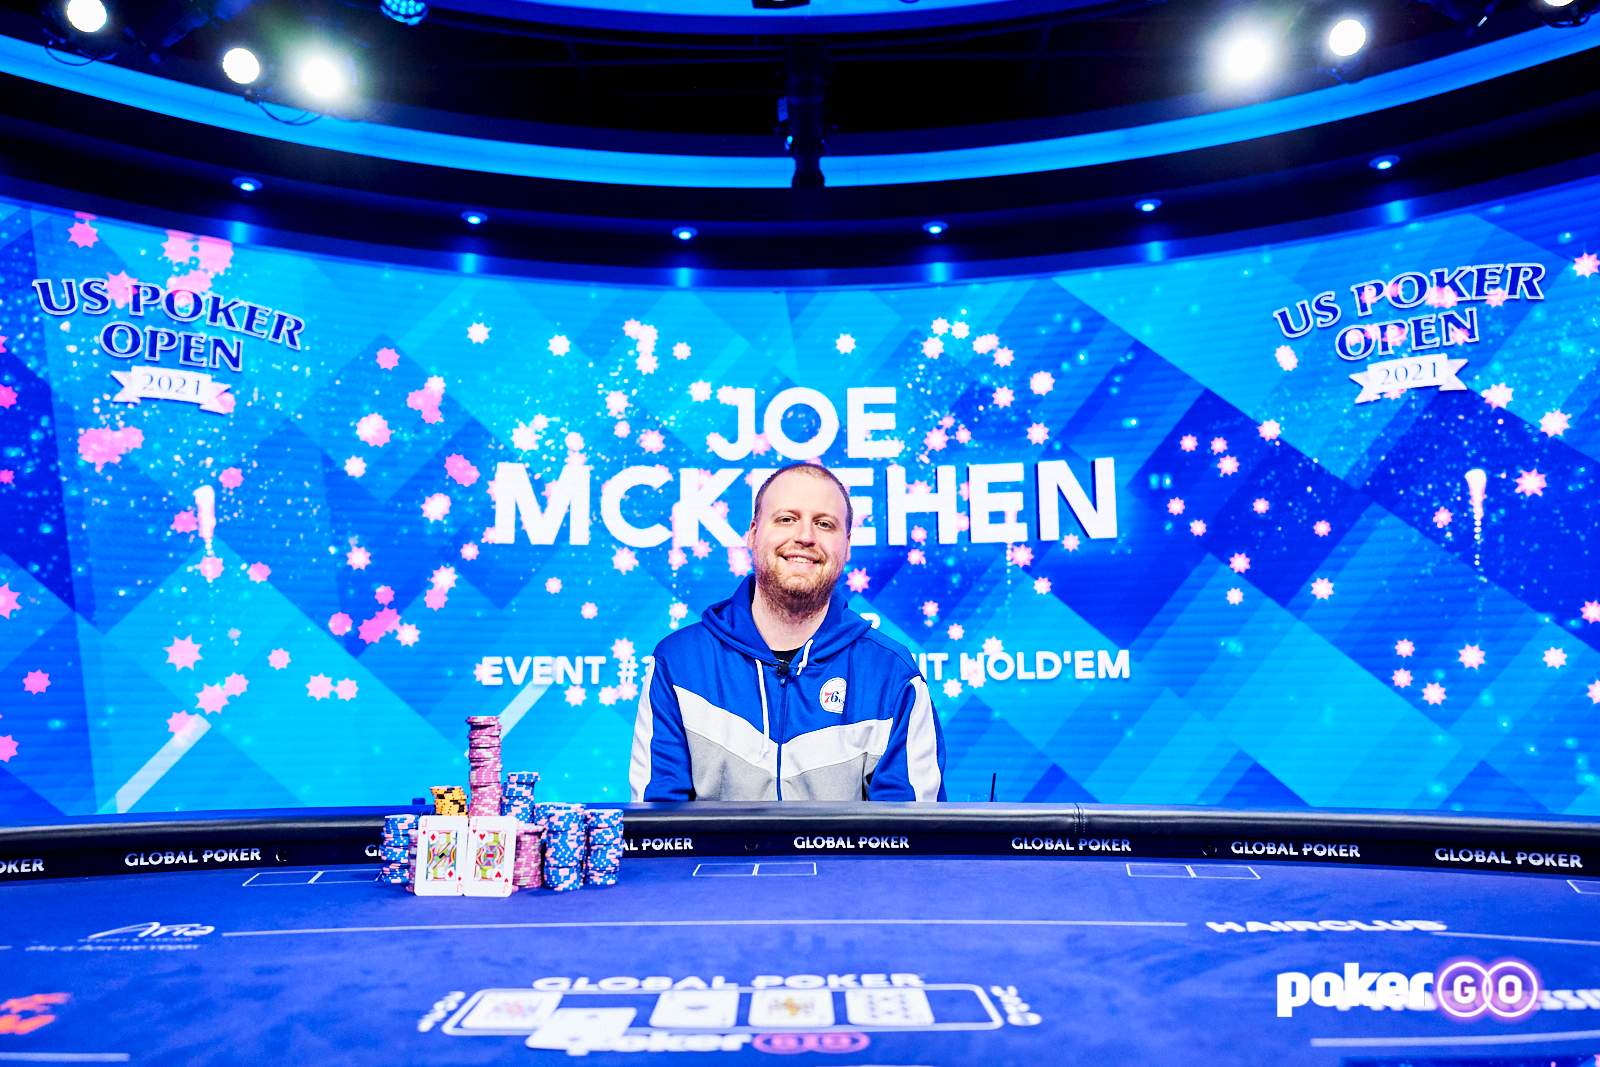 Joe McKeehen Claims U.S. Poker Open Event #3 Win for $200,200